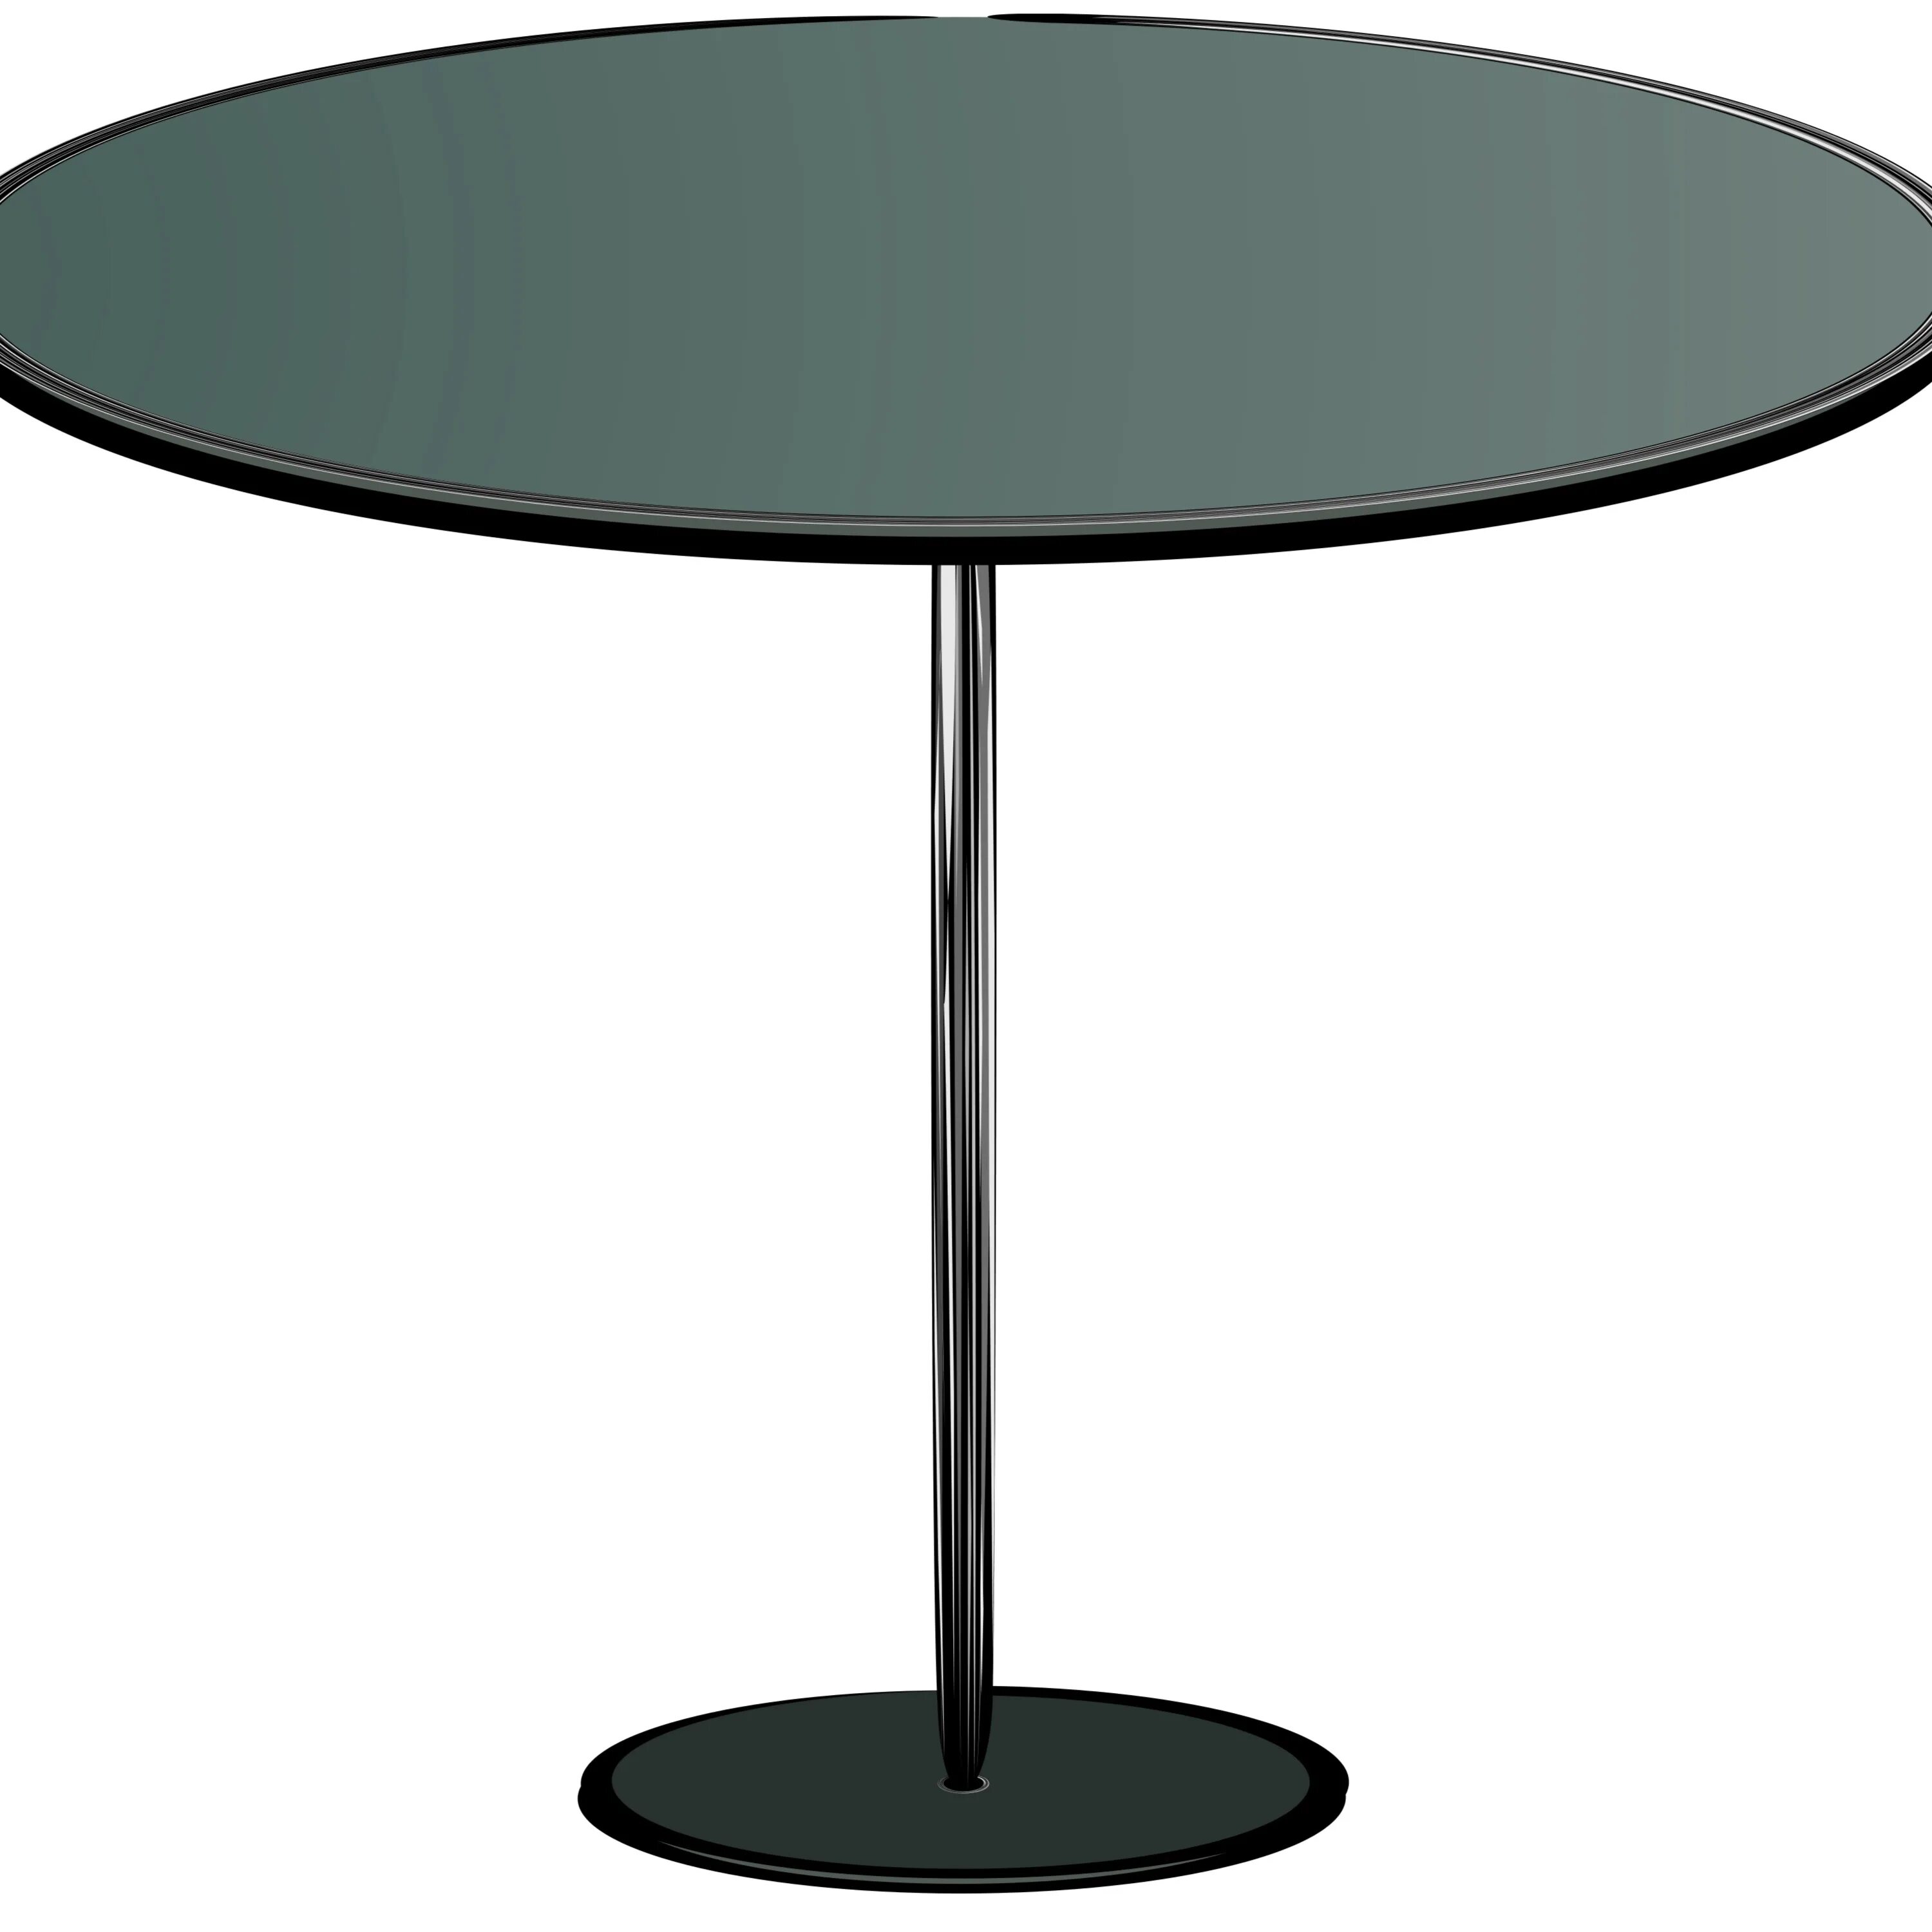 Round cafe. Что такое раунд тейбл (Round Table). Столик круглый. Круглый стол для кафе. Столик для кафе круглый.